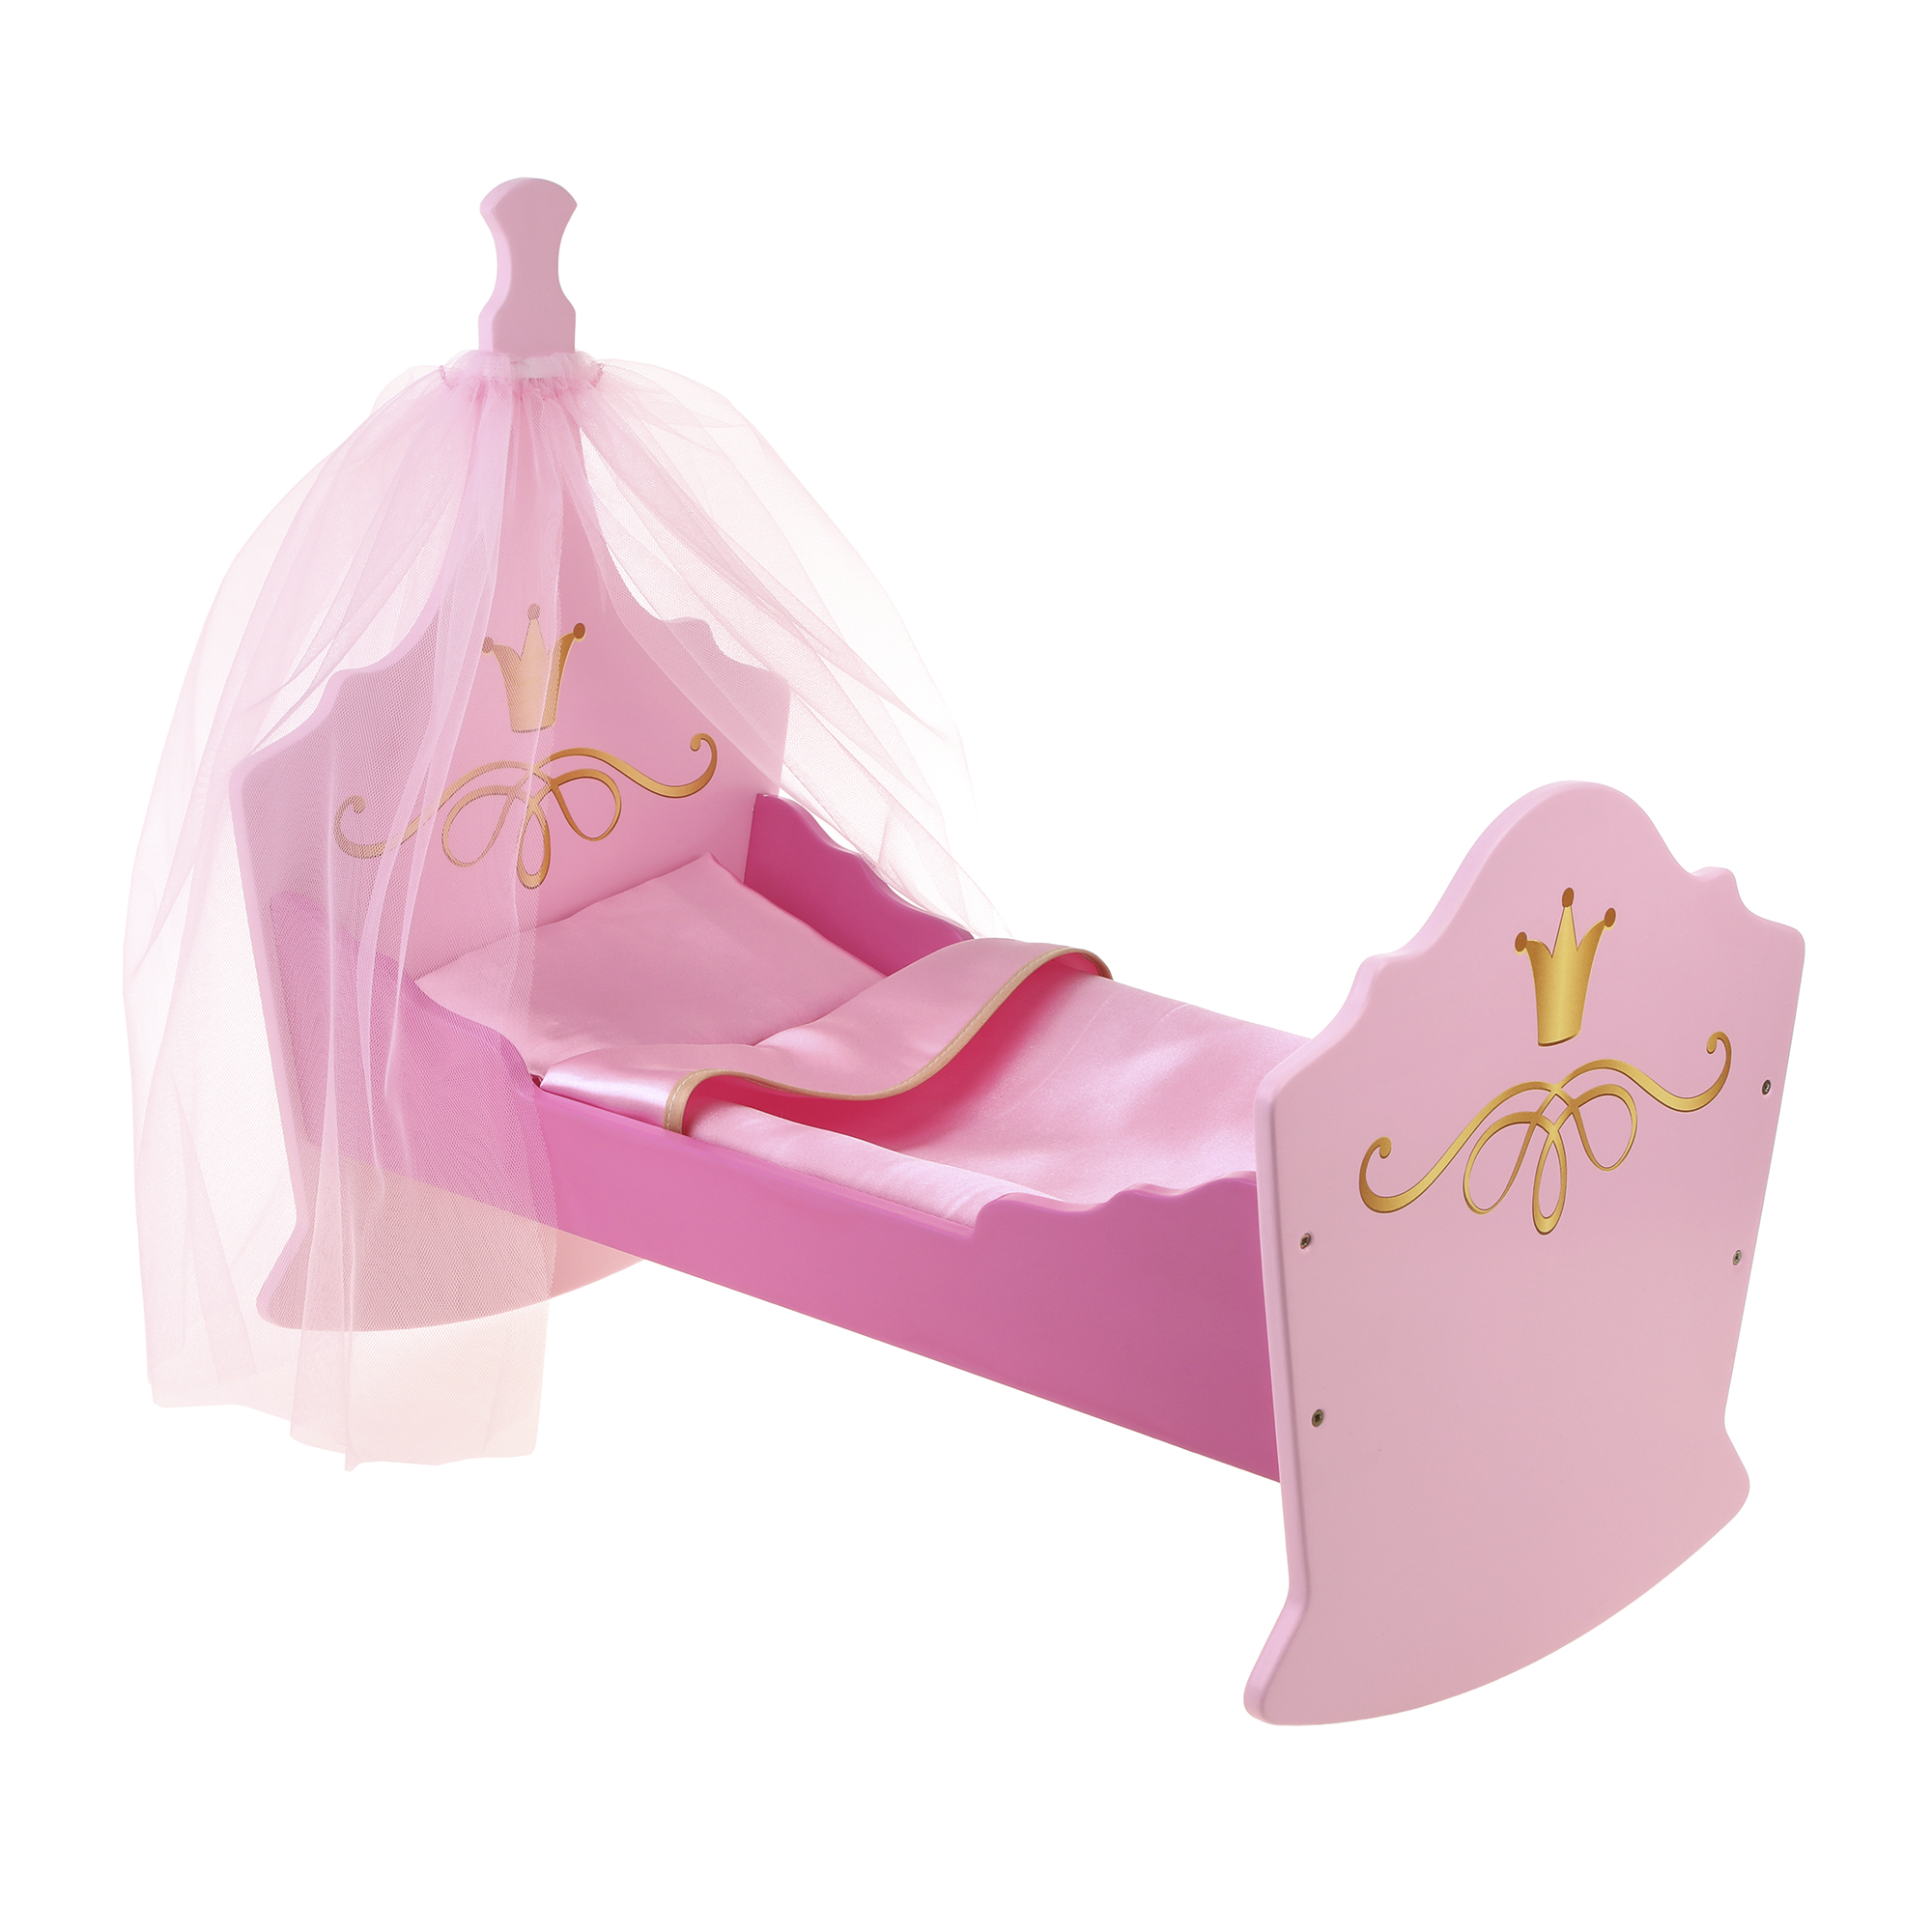 Кроватка-люлька Mary Poppins с балдахином кукольная мебель для куклы пупса кукол. Принцесса 67415 - фото 1